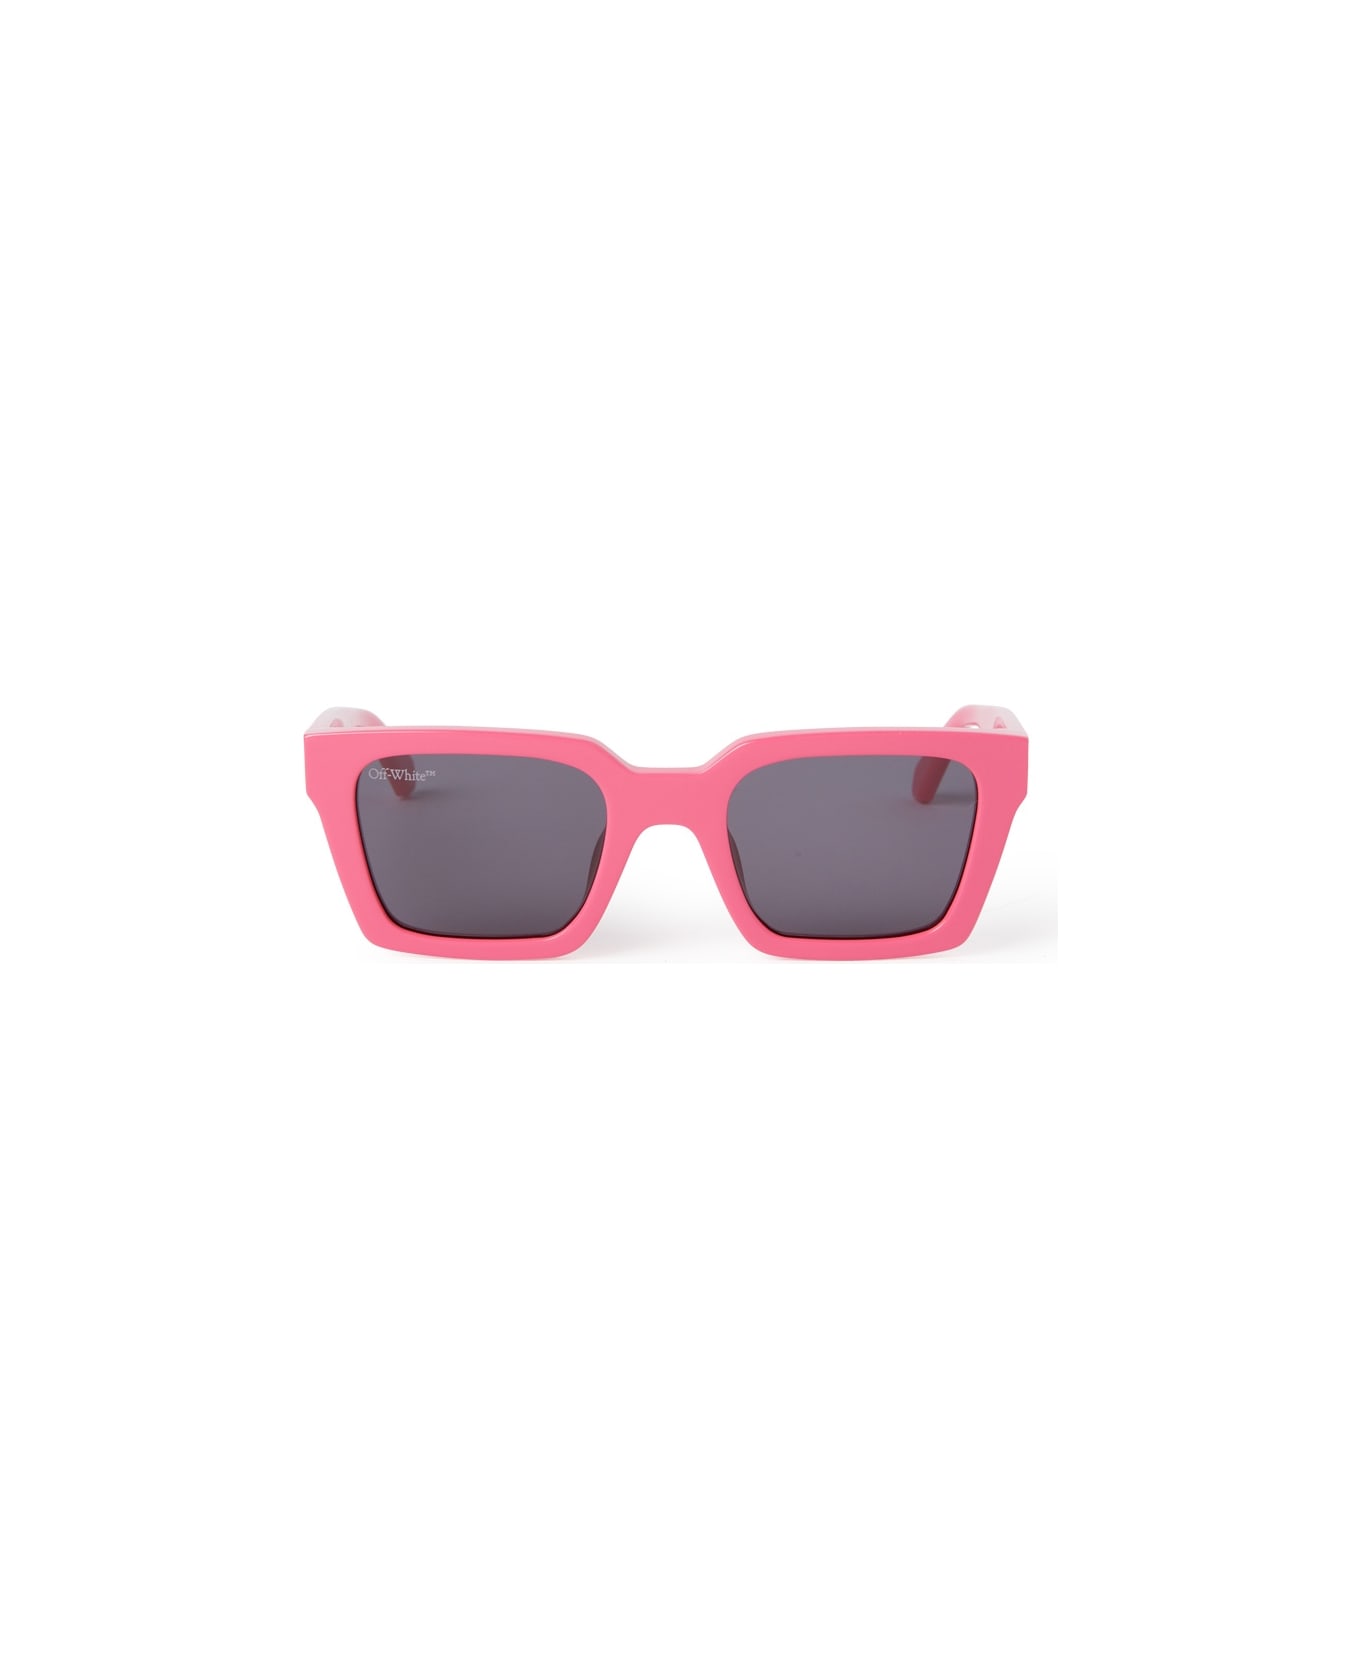 Off-White PALERMO SUNGLASSES Sunglasses - Fuchsia サングラス